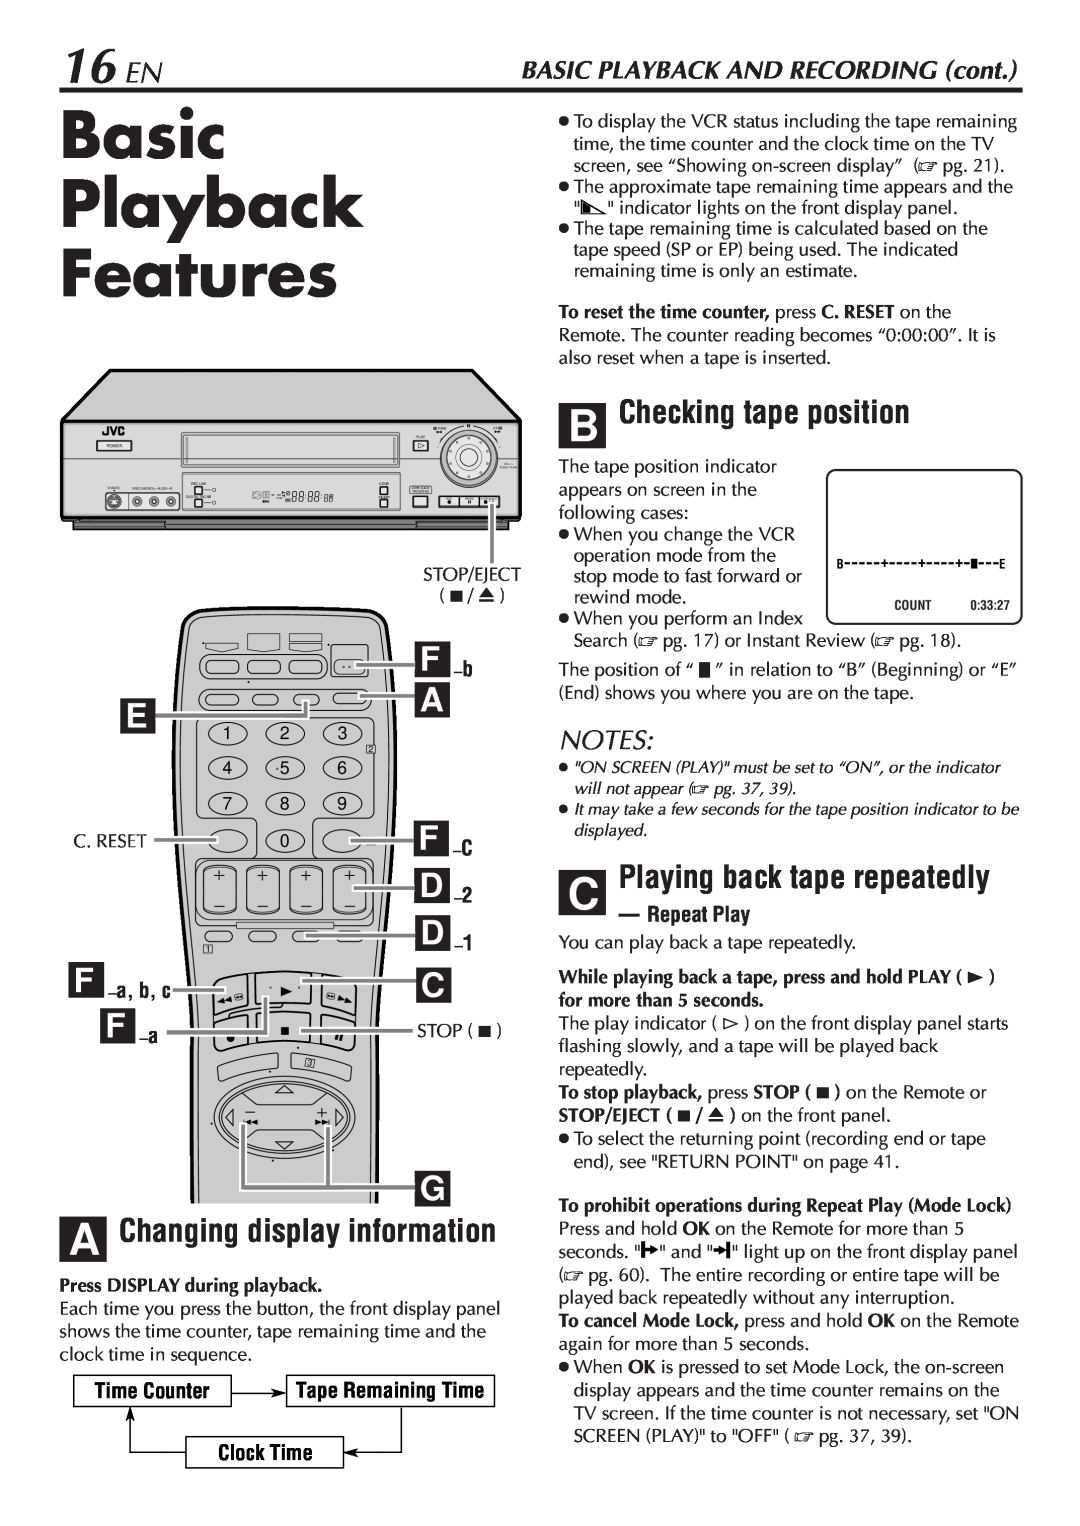 JVC SR-V10U manual Basic Playback Features, 16 EN, F -b, F -C, D, A Changing display information, B Checking tape position 